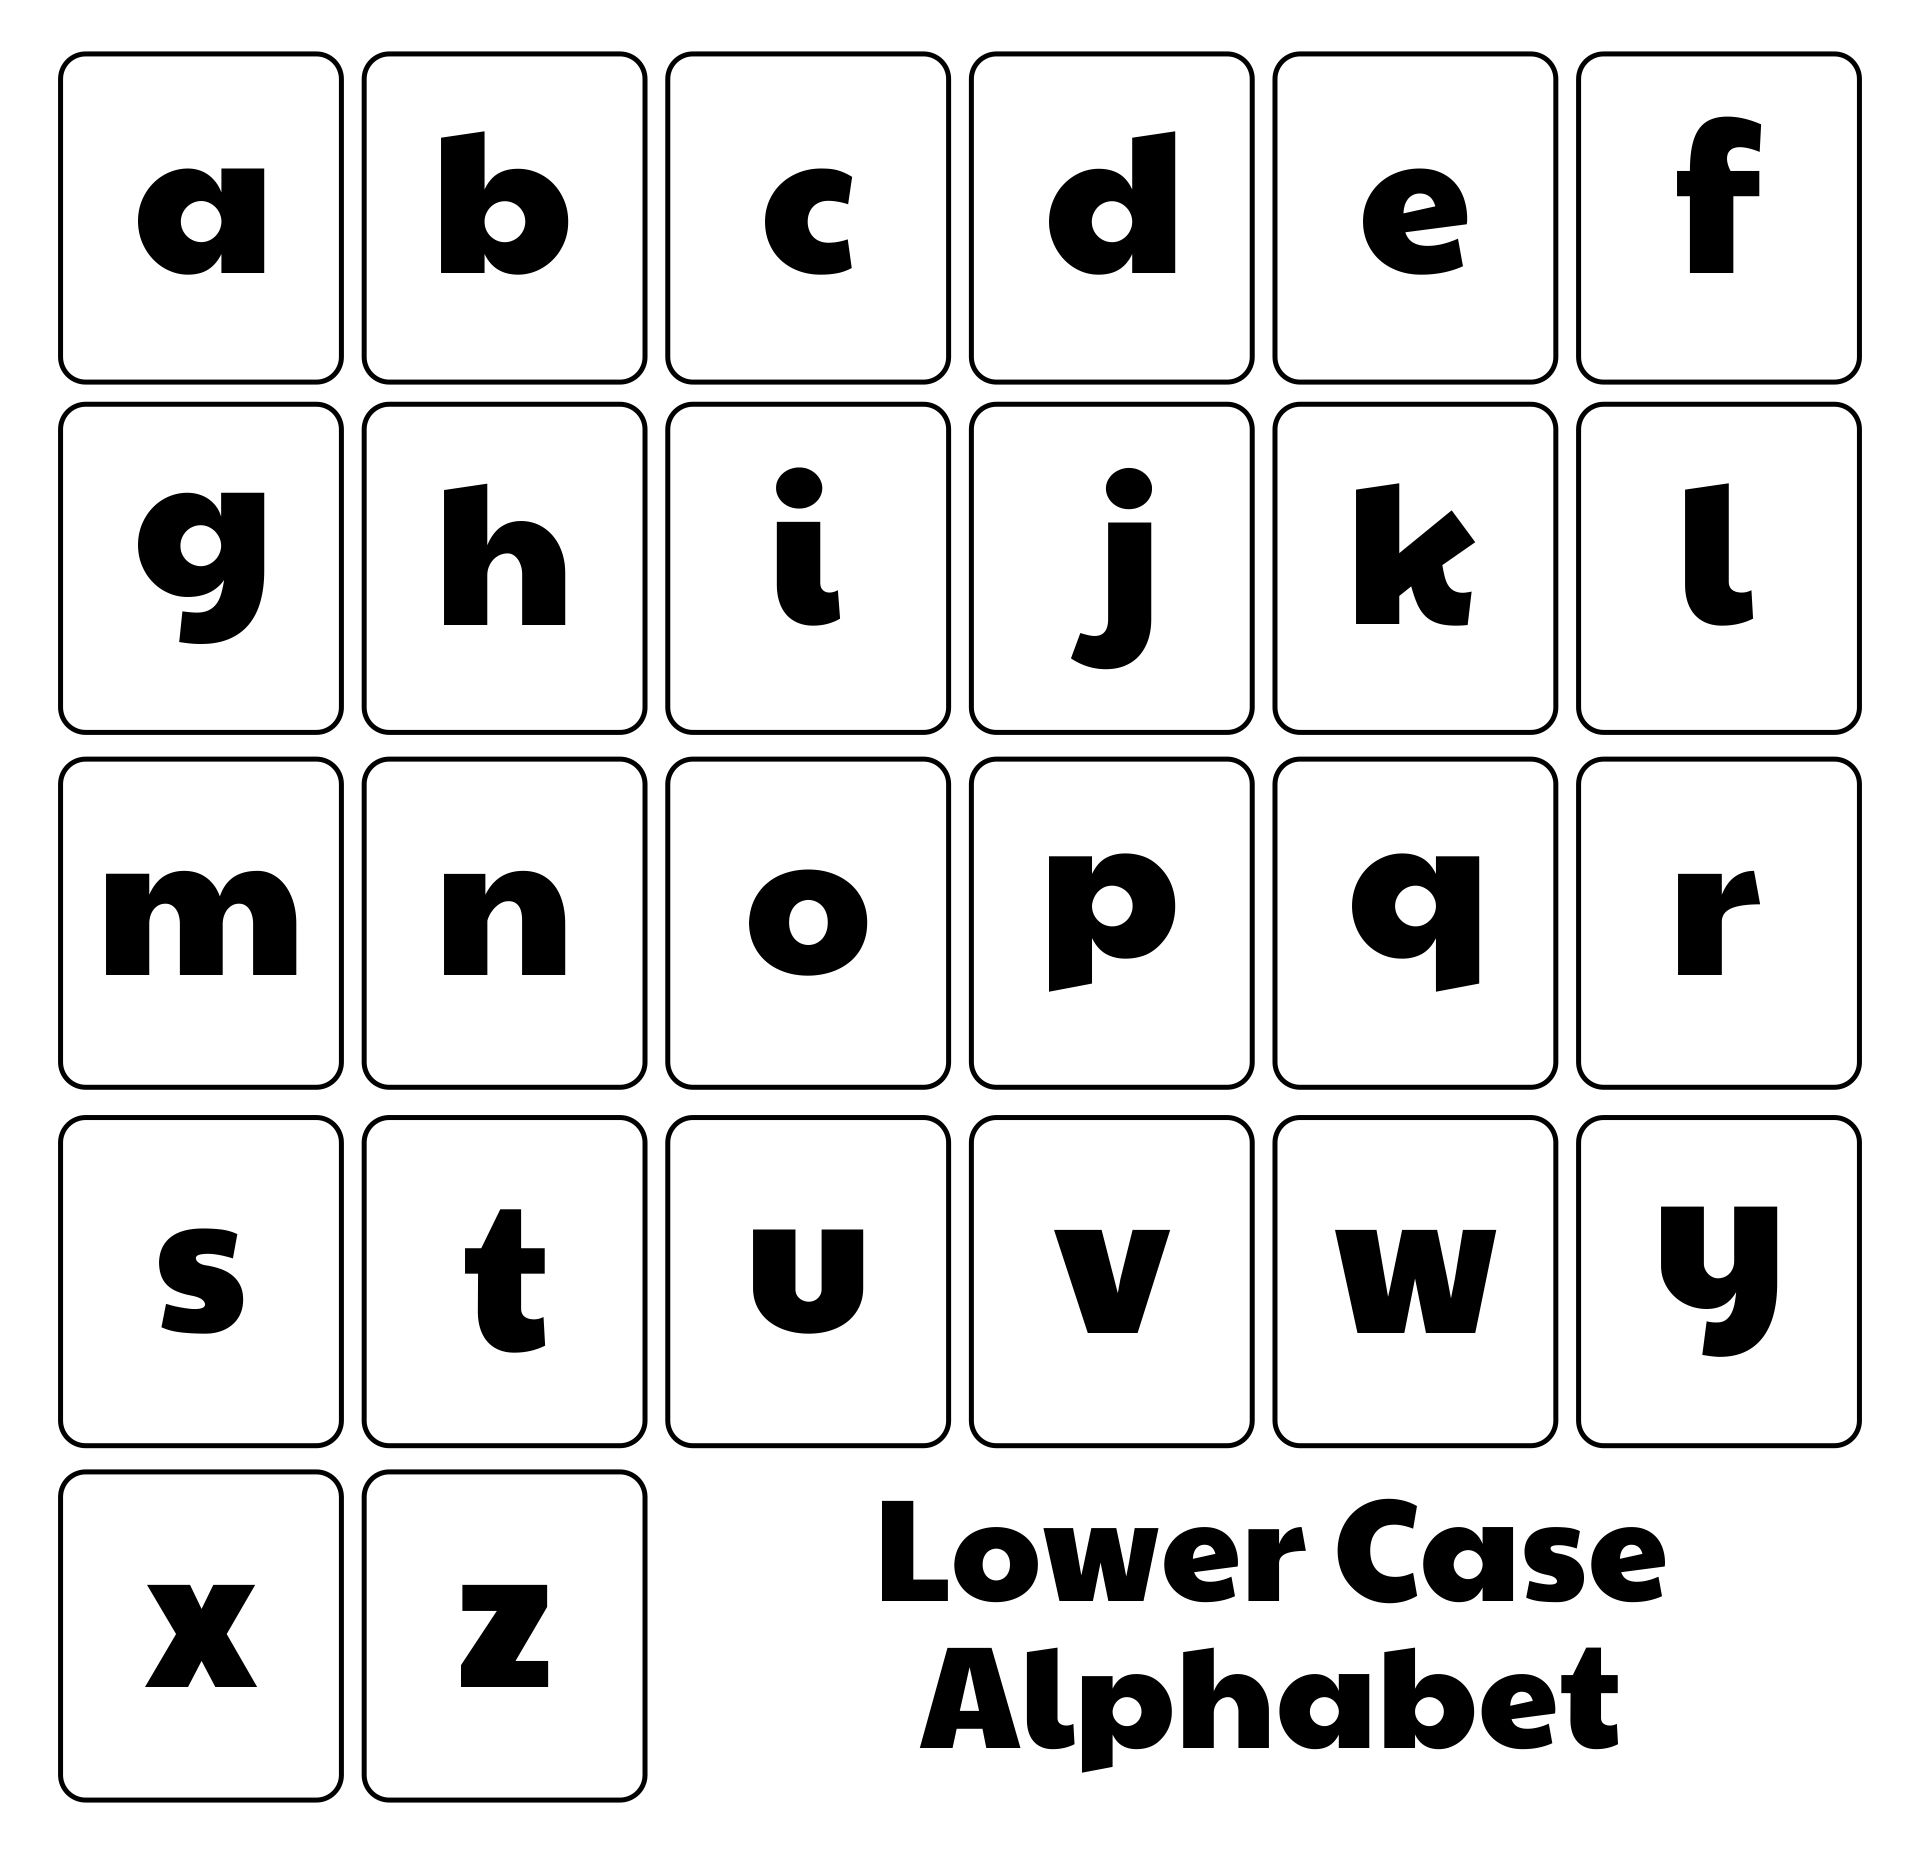 Printable Lower Case Alphabet Flash Cards